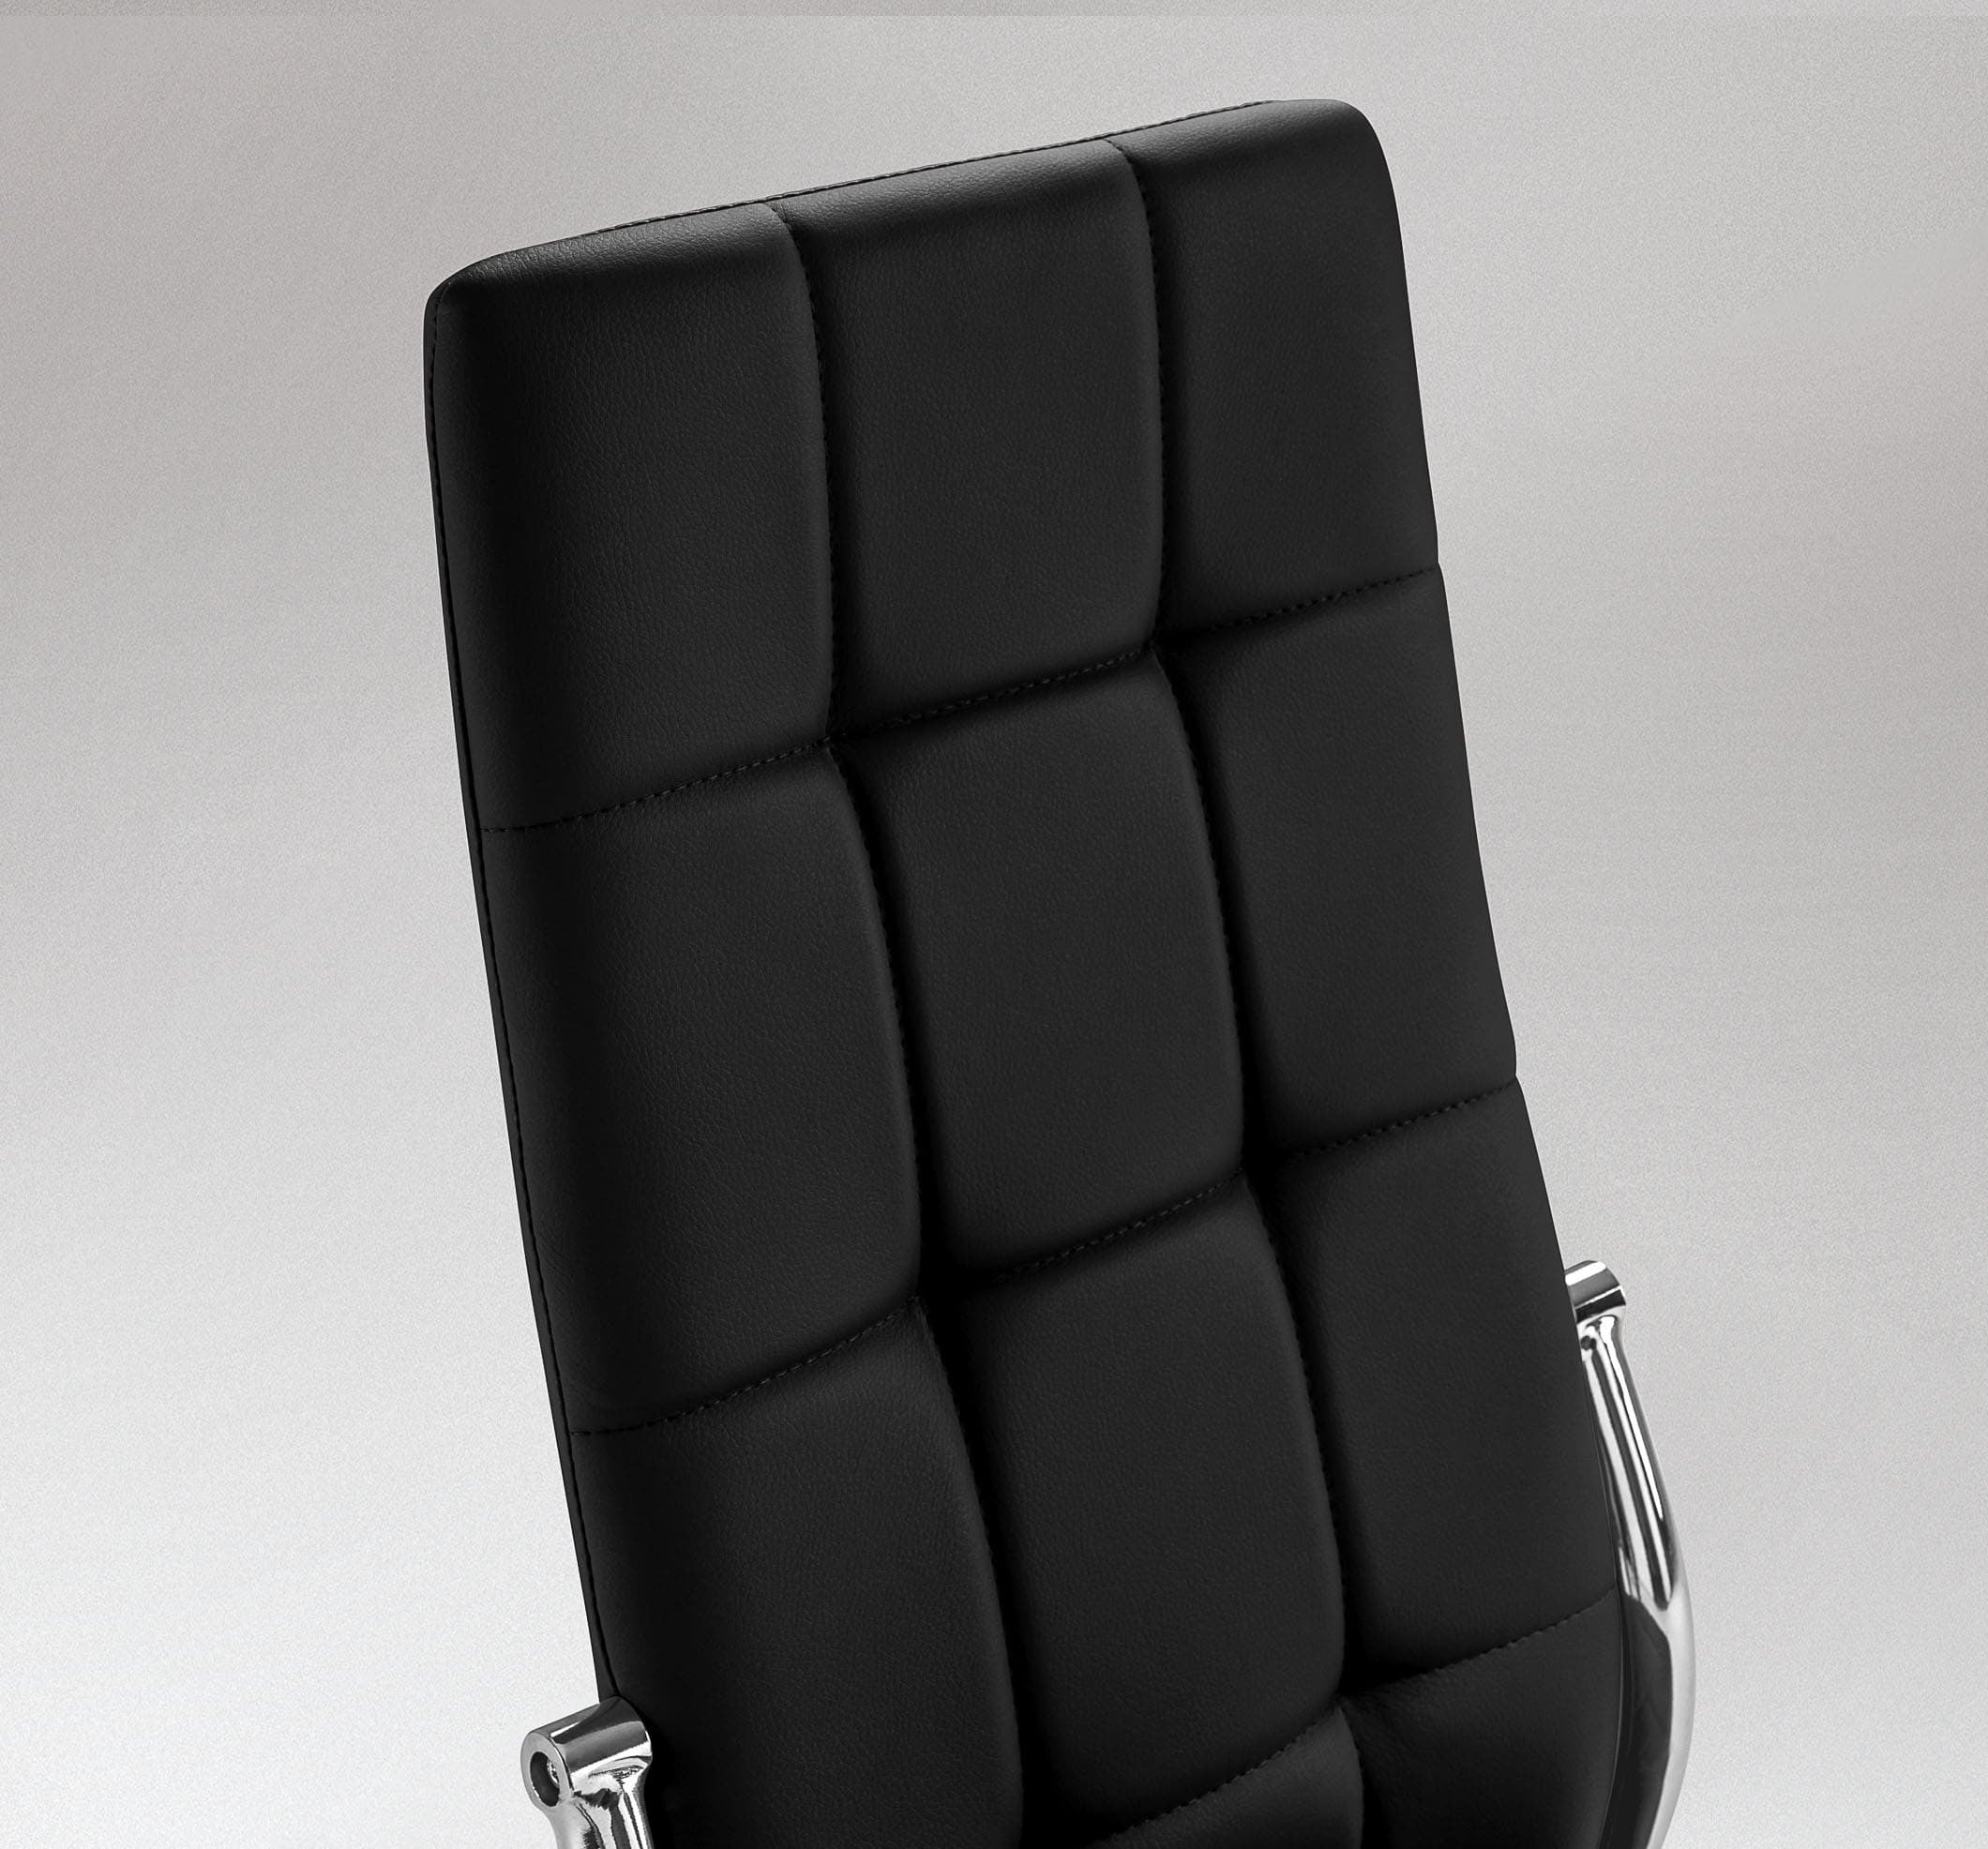 Set da 4 pezzi sedie nere imbottite con gambe cromate per sala da pranzo o cucina